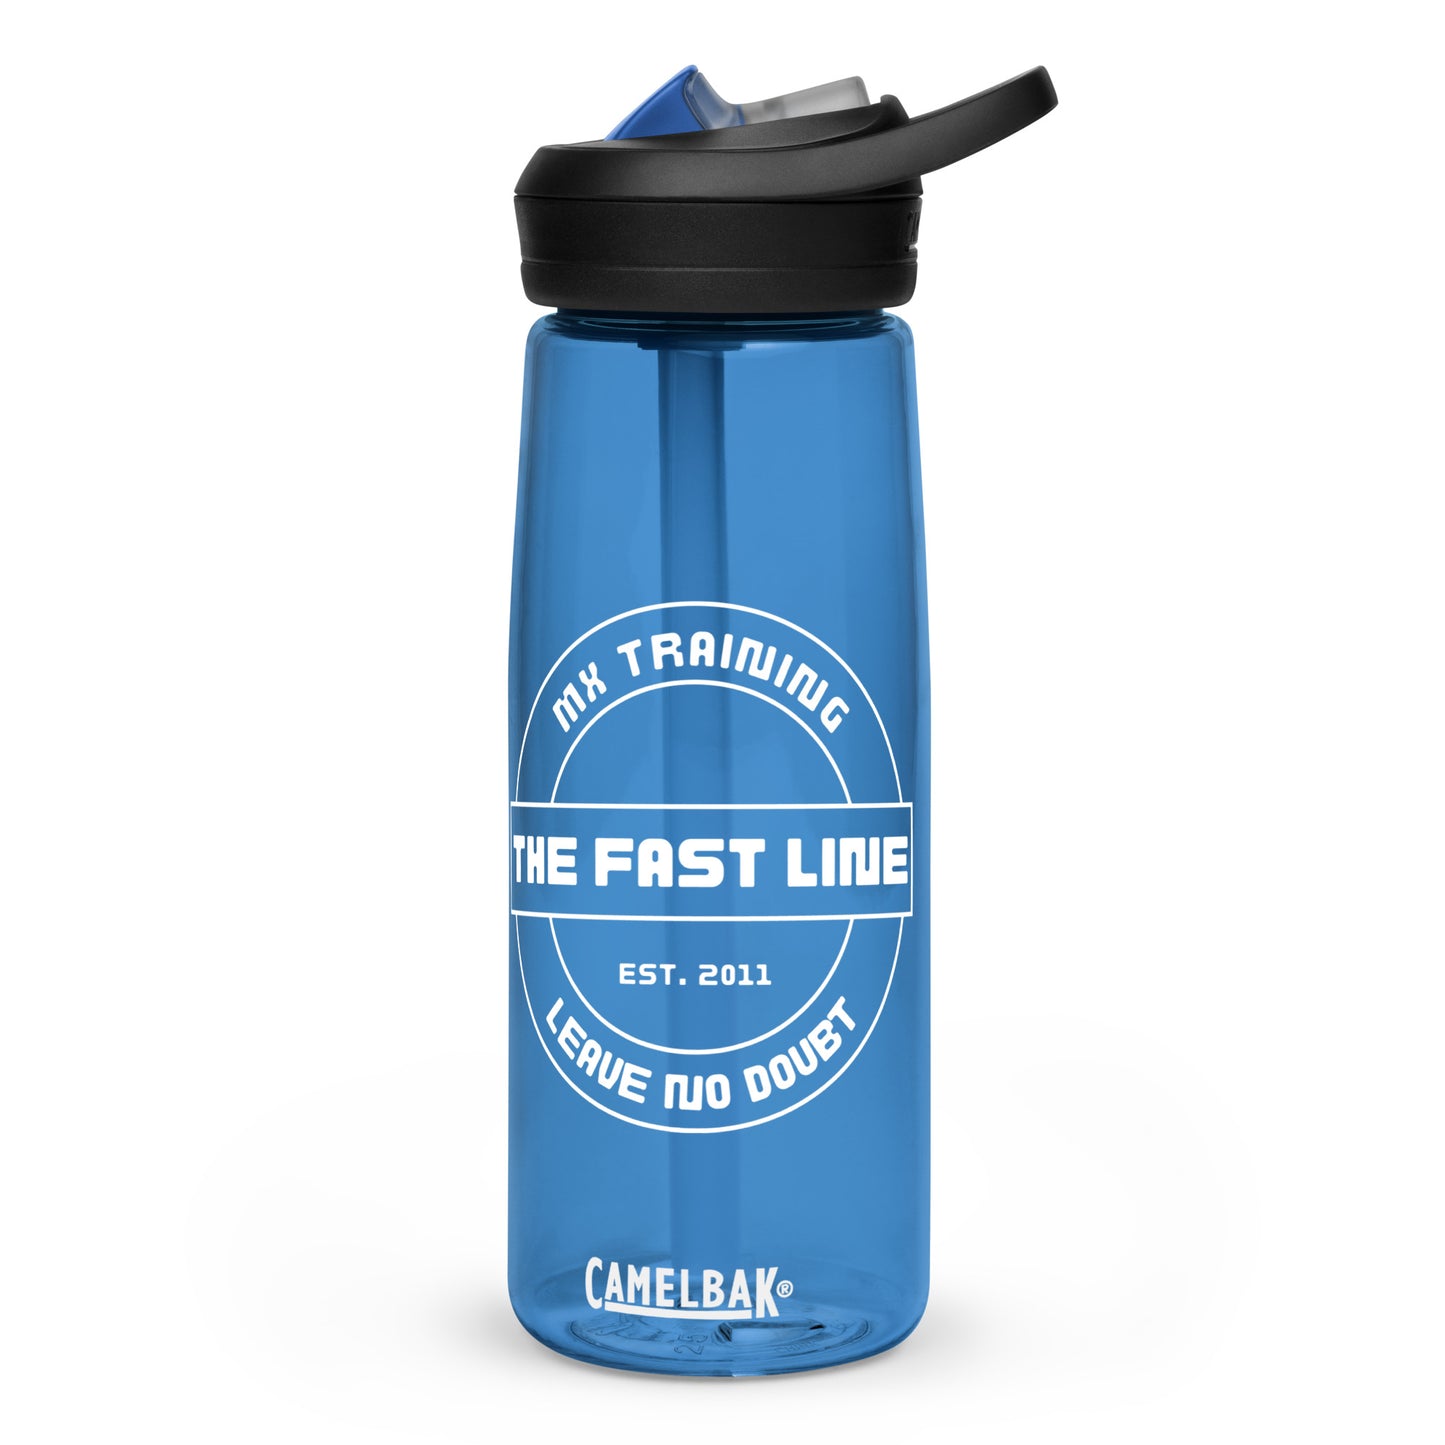 The Fast Line Camelbak Water Bottle